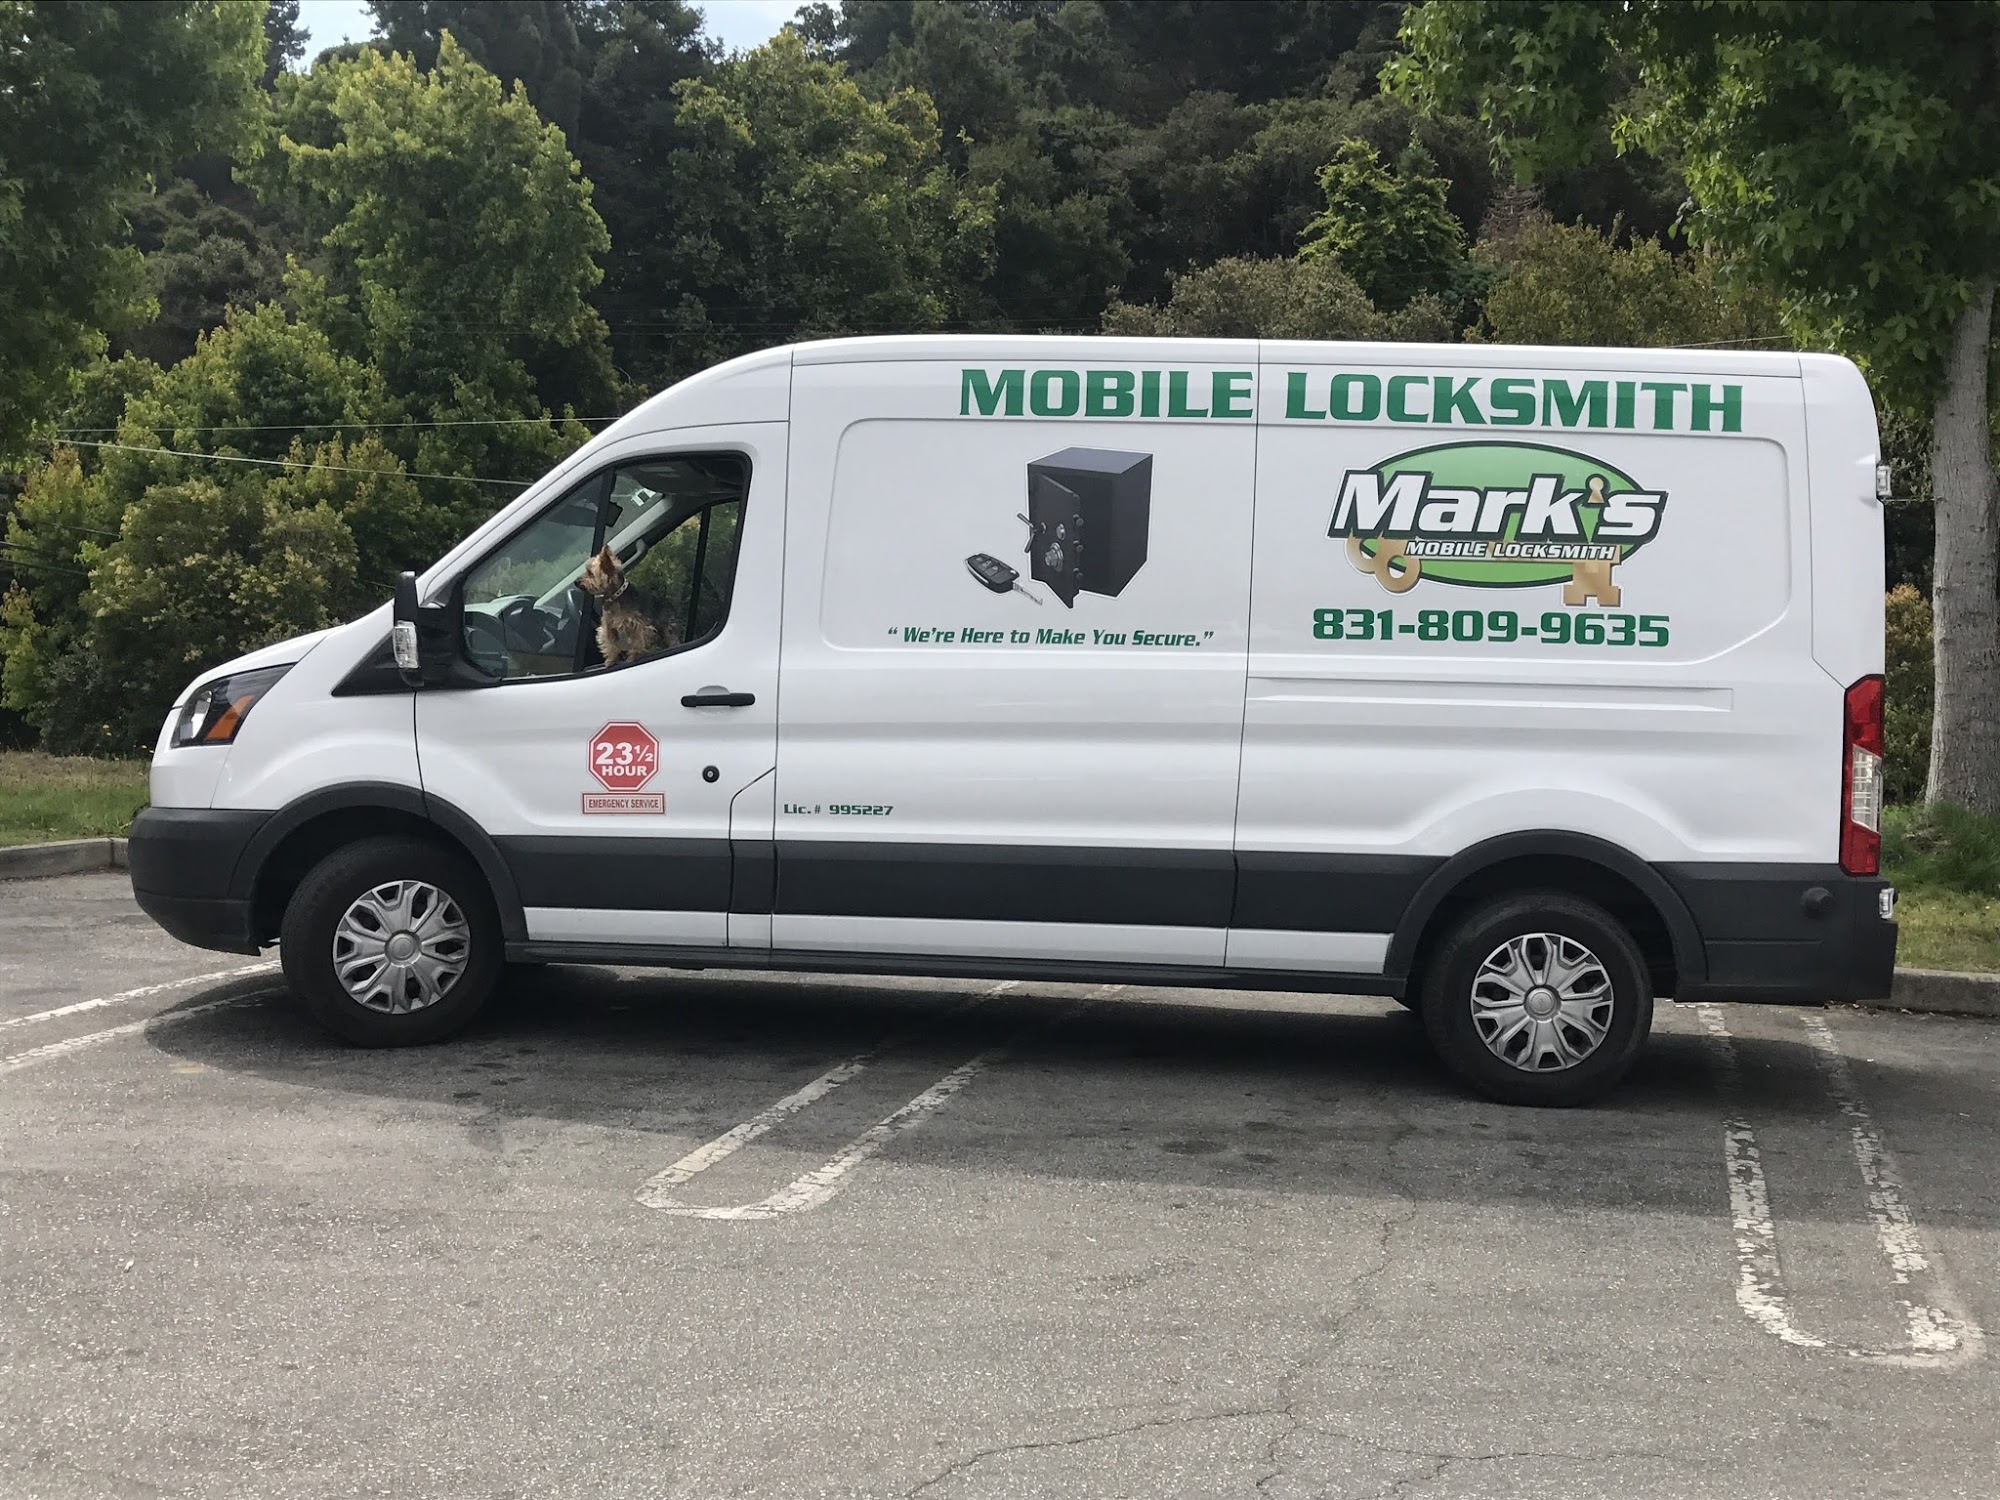 Mark's Mobile Locksmith